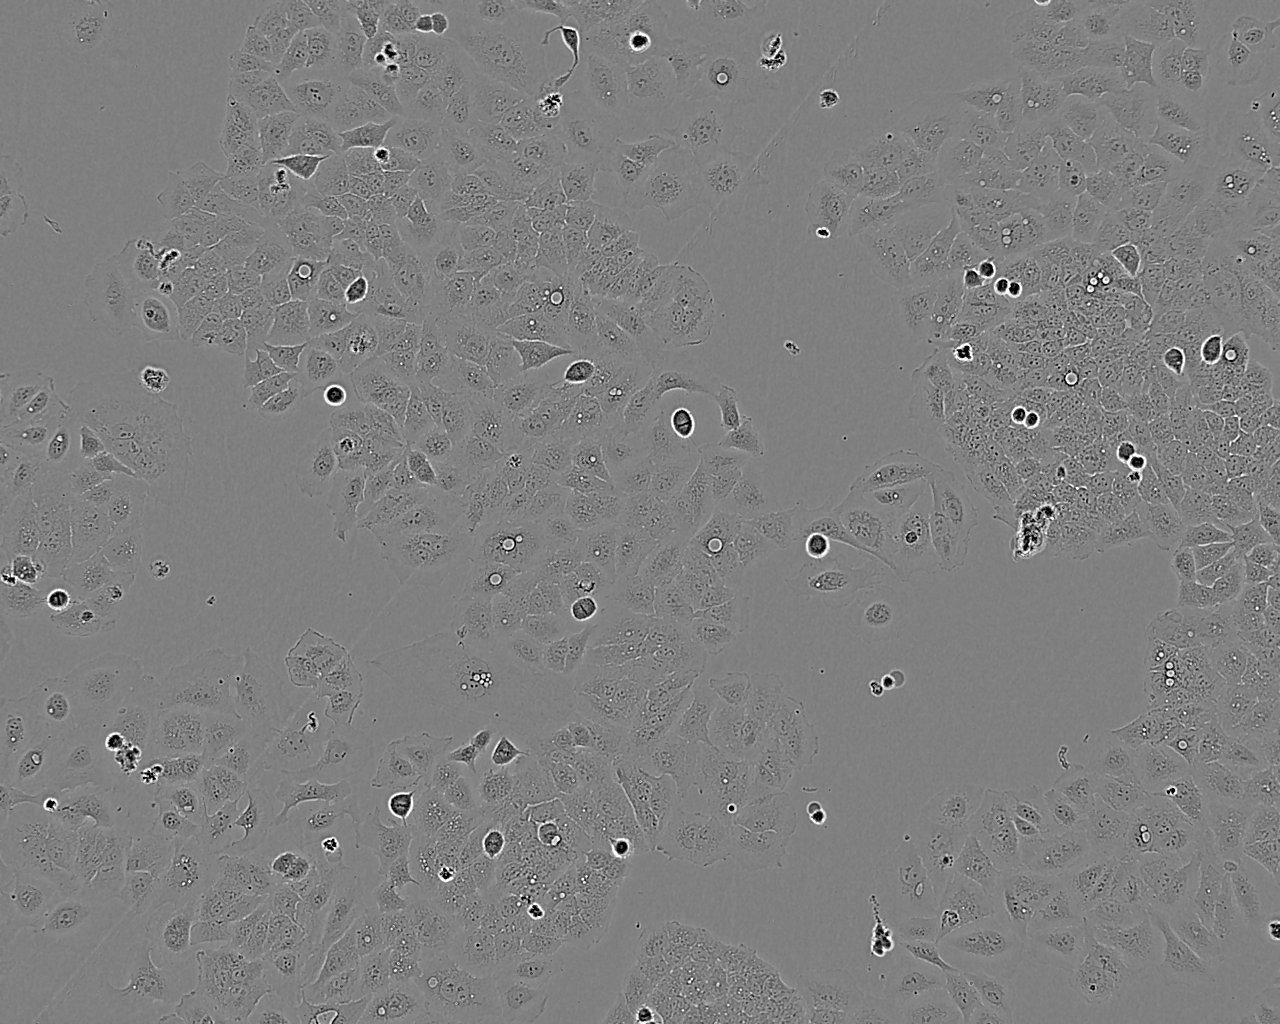 HuH-6 Cells|人肝母细胞瘤细胞系